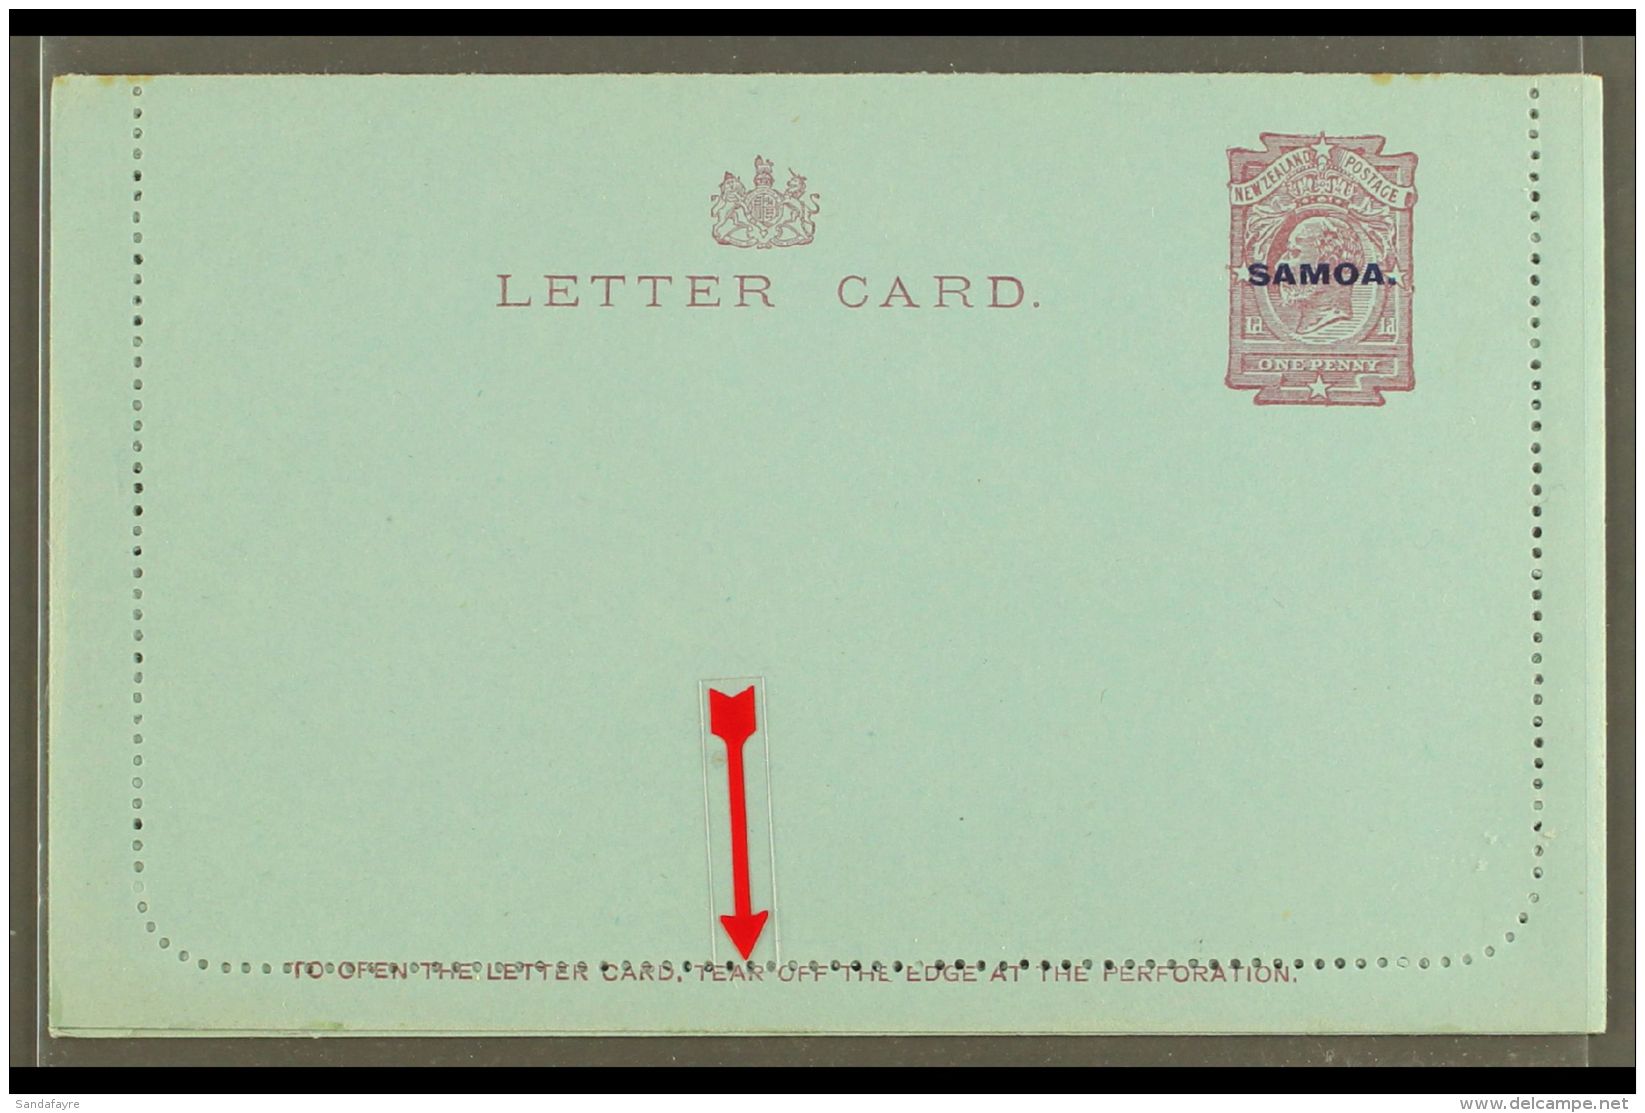 1914 LETTER CARD 1d Dull Claret On Blue, Inscription 94mm, H&amp;G 1a, Unused, Broken Second "T" In "LETTER CARD,"... - Samoa